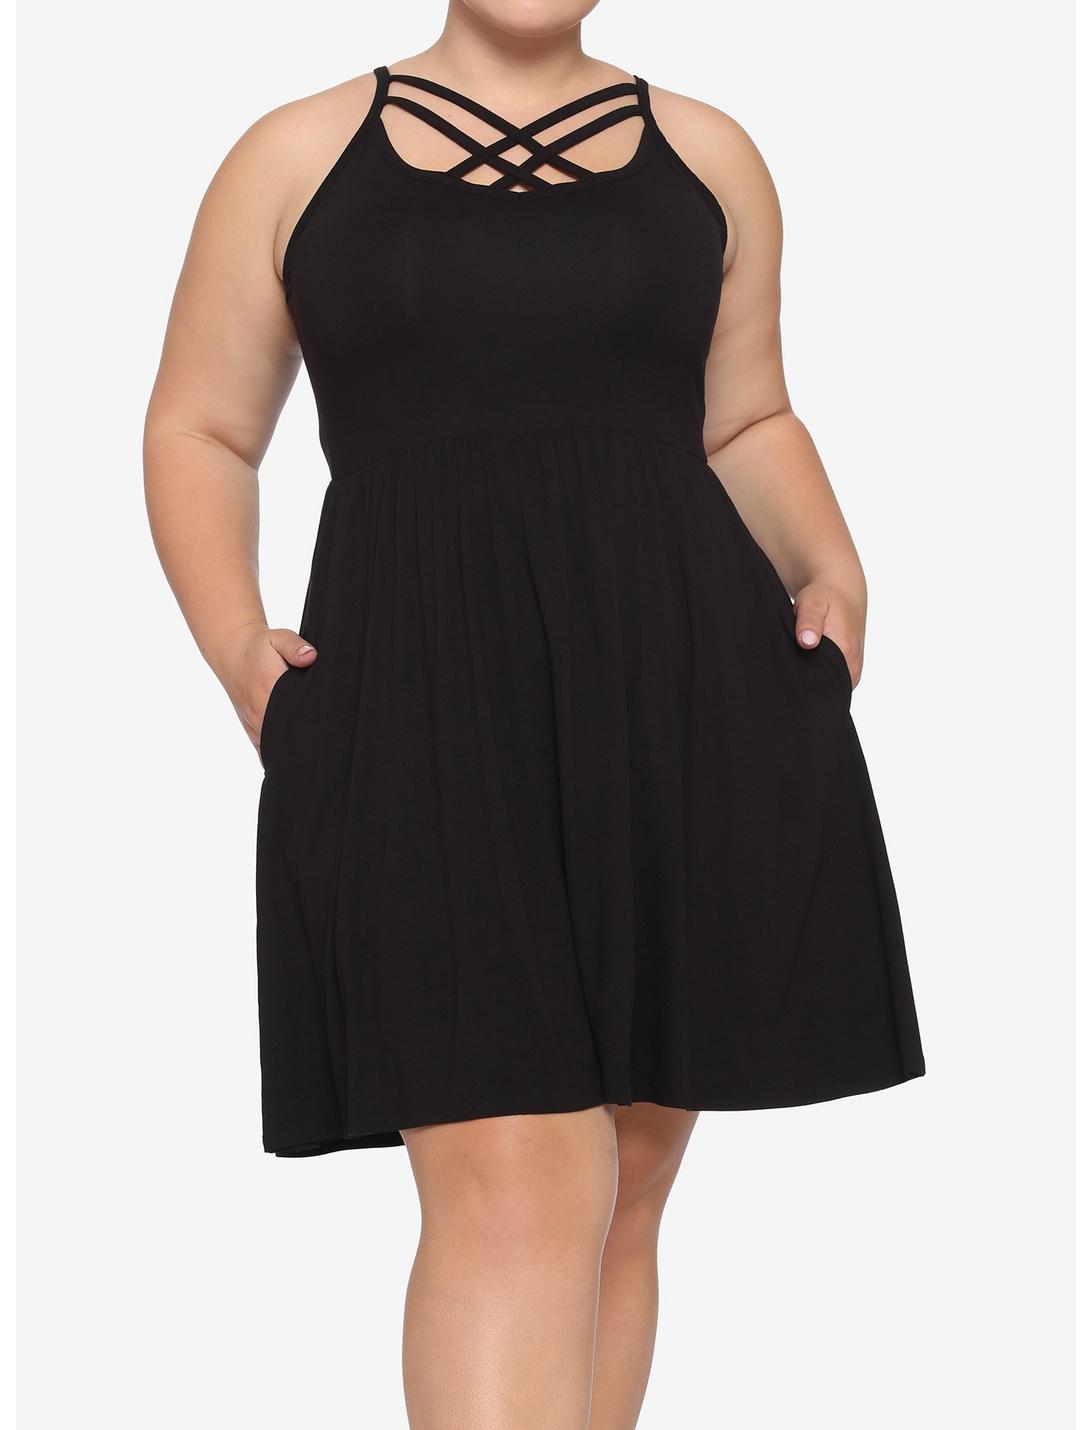 Black Front Strappy Dress Plus Size, BLACK, hi-res